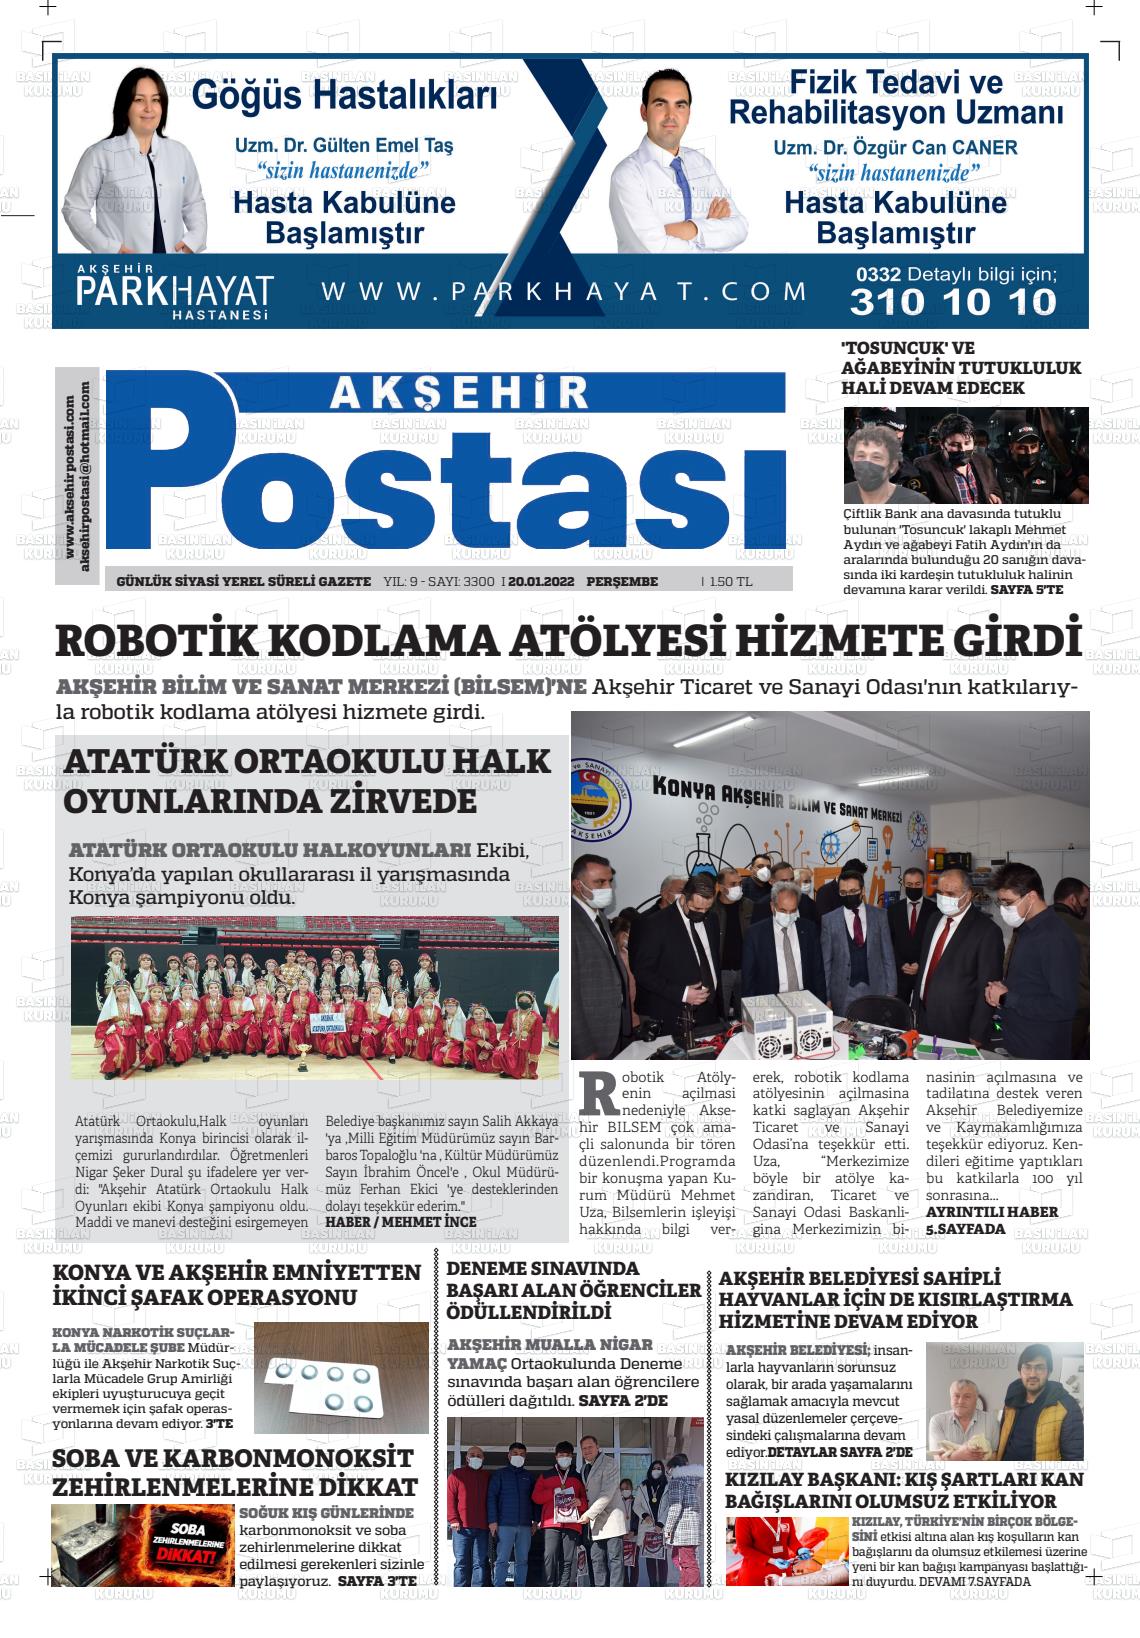 20 Ocak 2022 Akşehir Postasi Gazete Manşeti